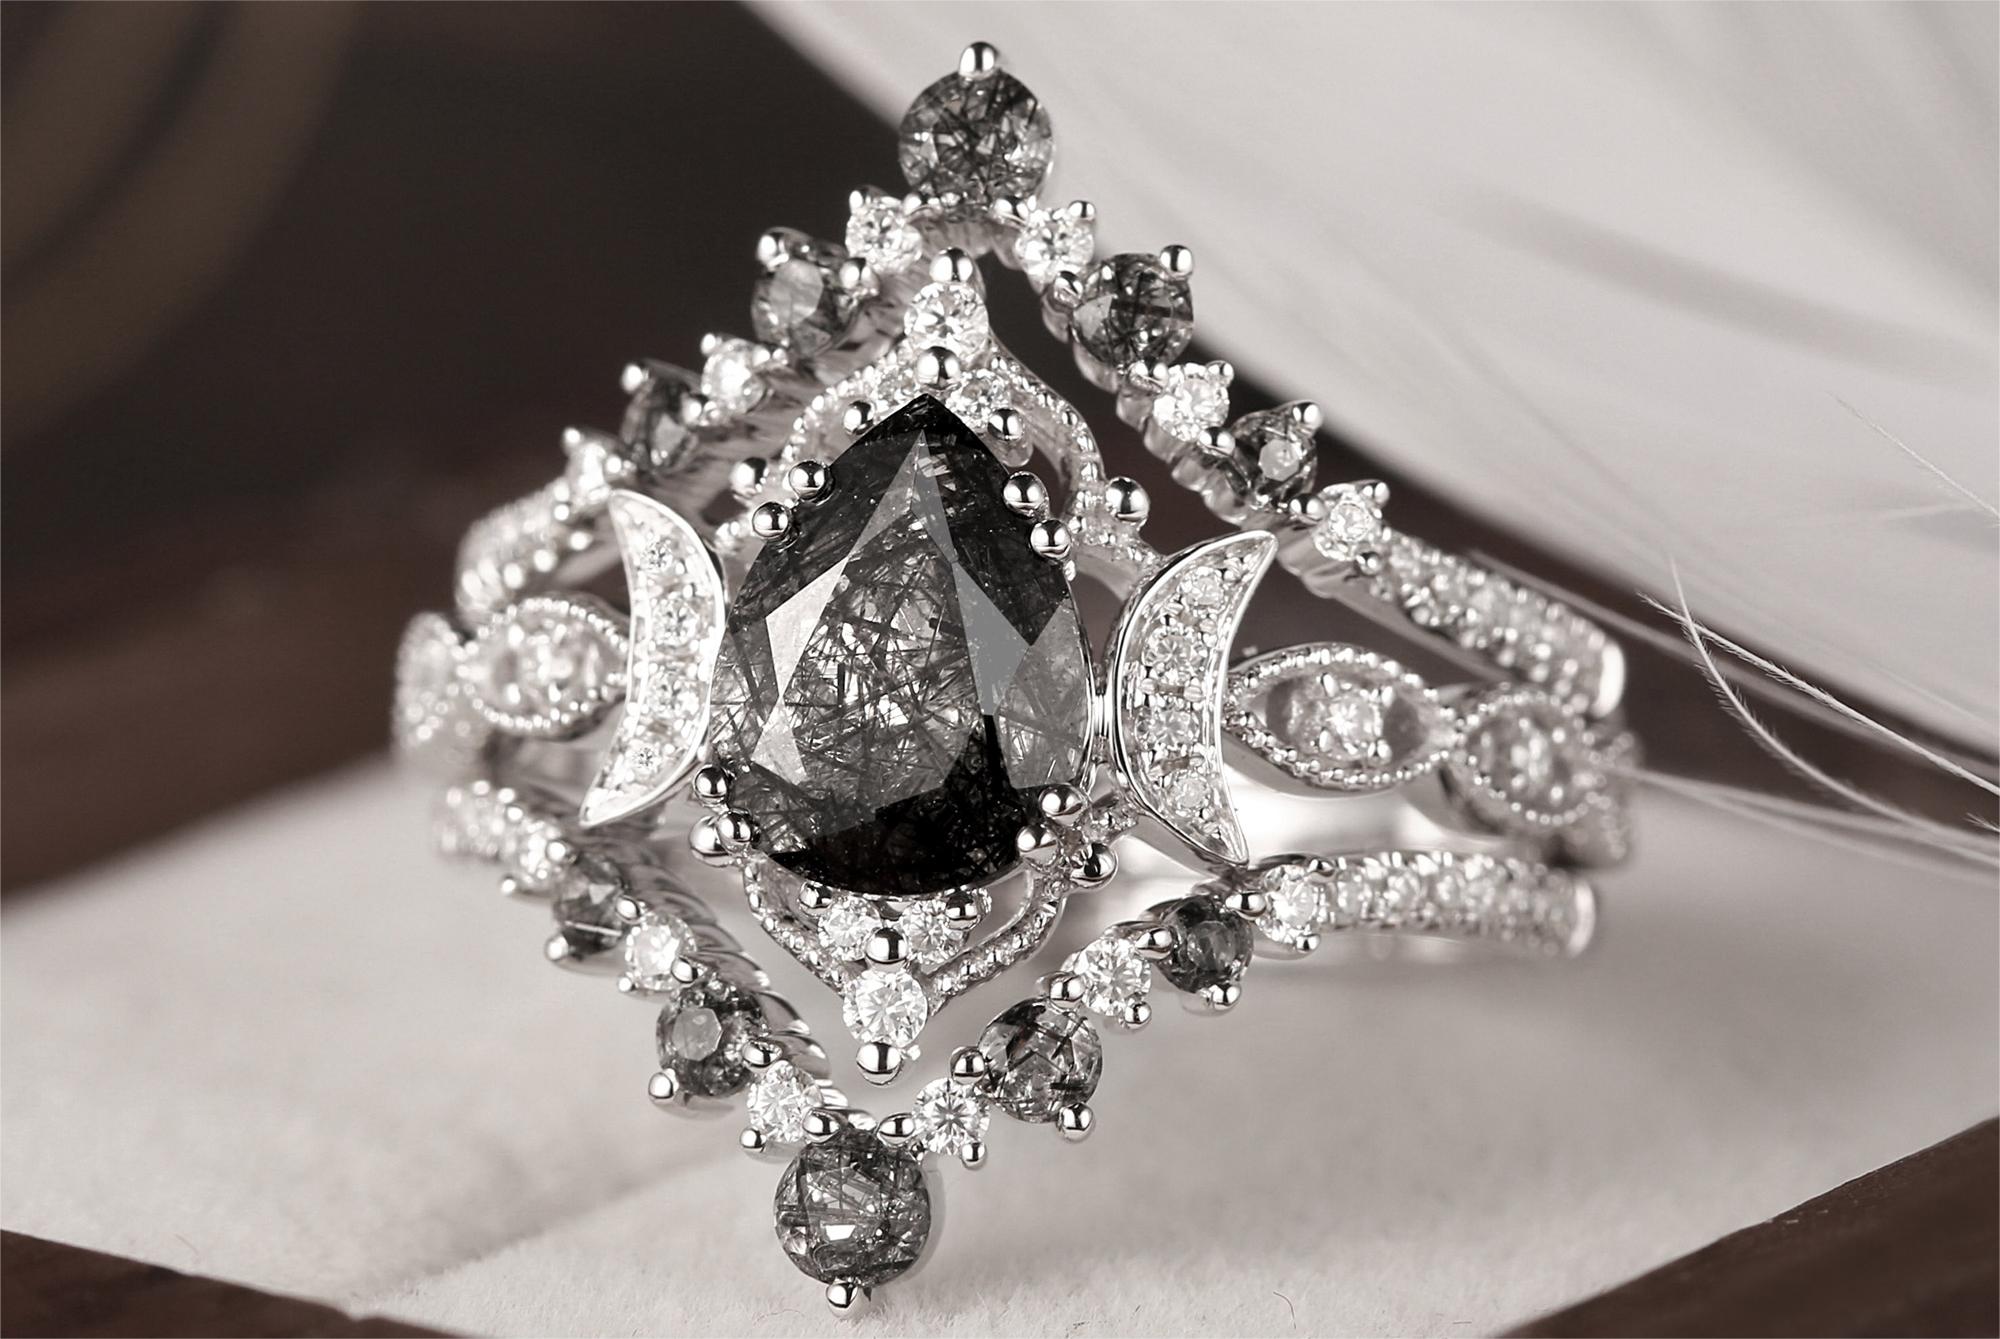 Unique Patterns, Unique Love: Choosing Stone for Your Ring